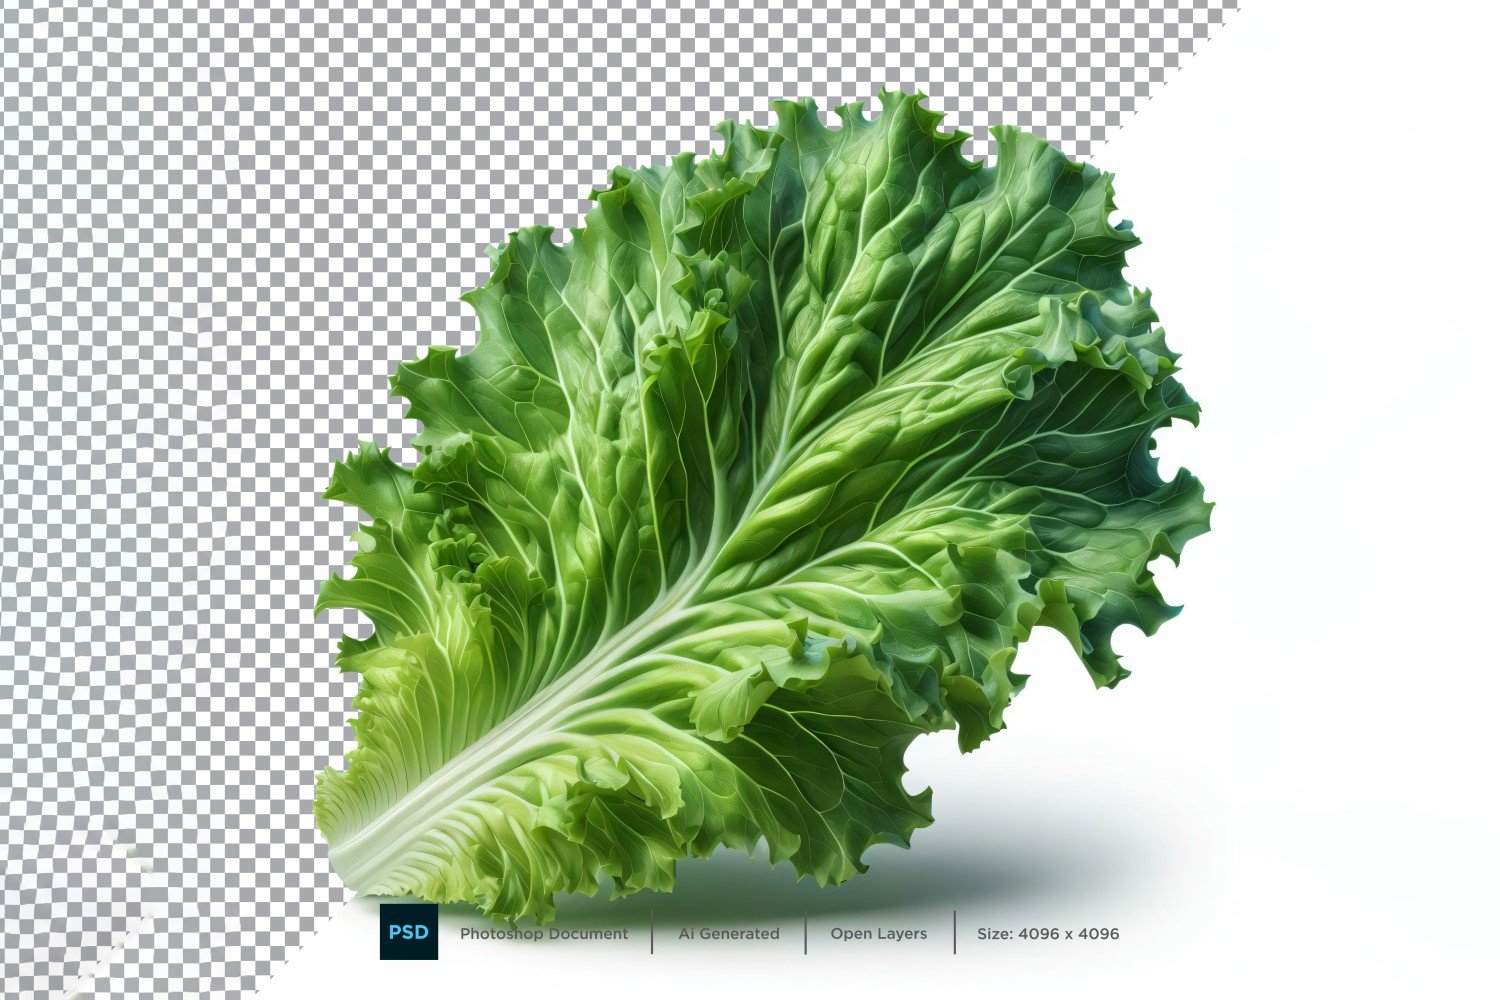 Lettuce Fresh Vegetable Transparent background 01